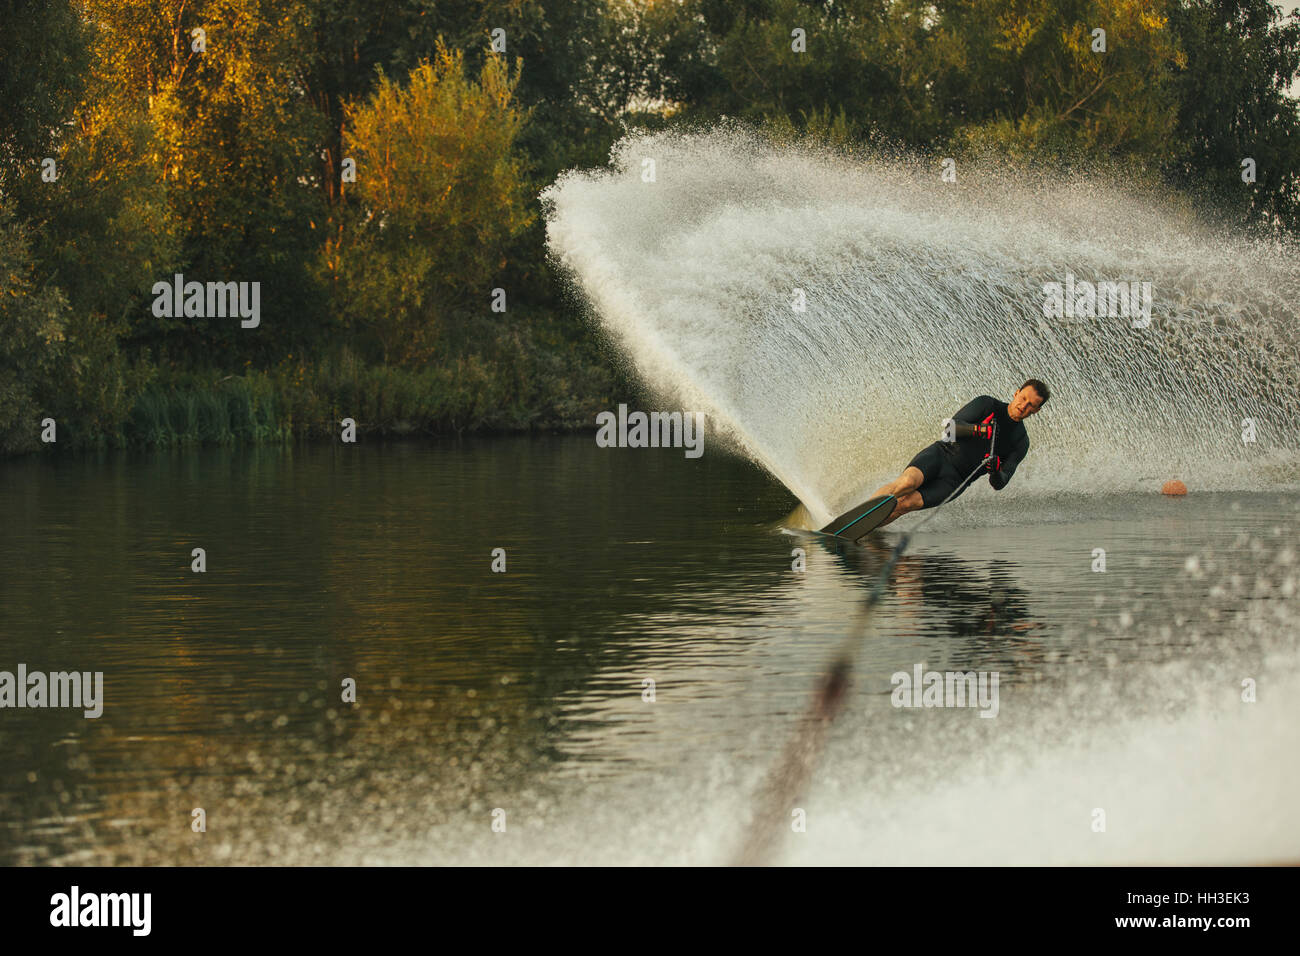 Wakeboarder skiing on lake with splash of water. Man practicing wakeboarding stunts. Stock Photo